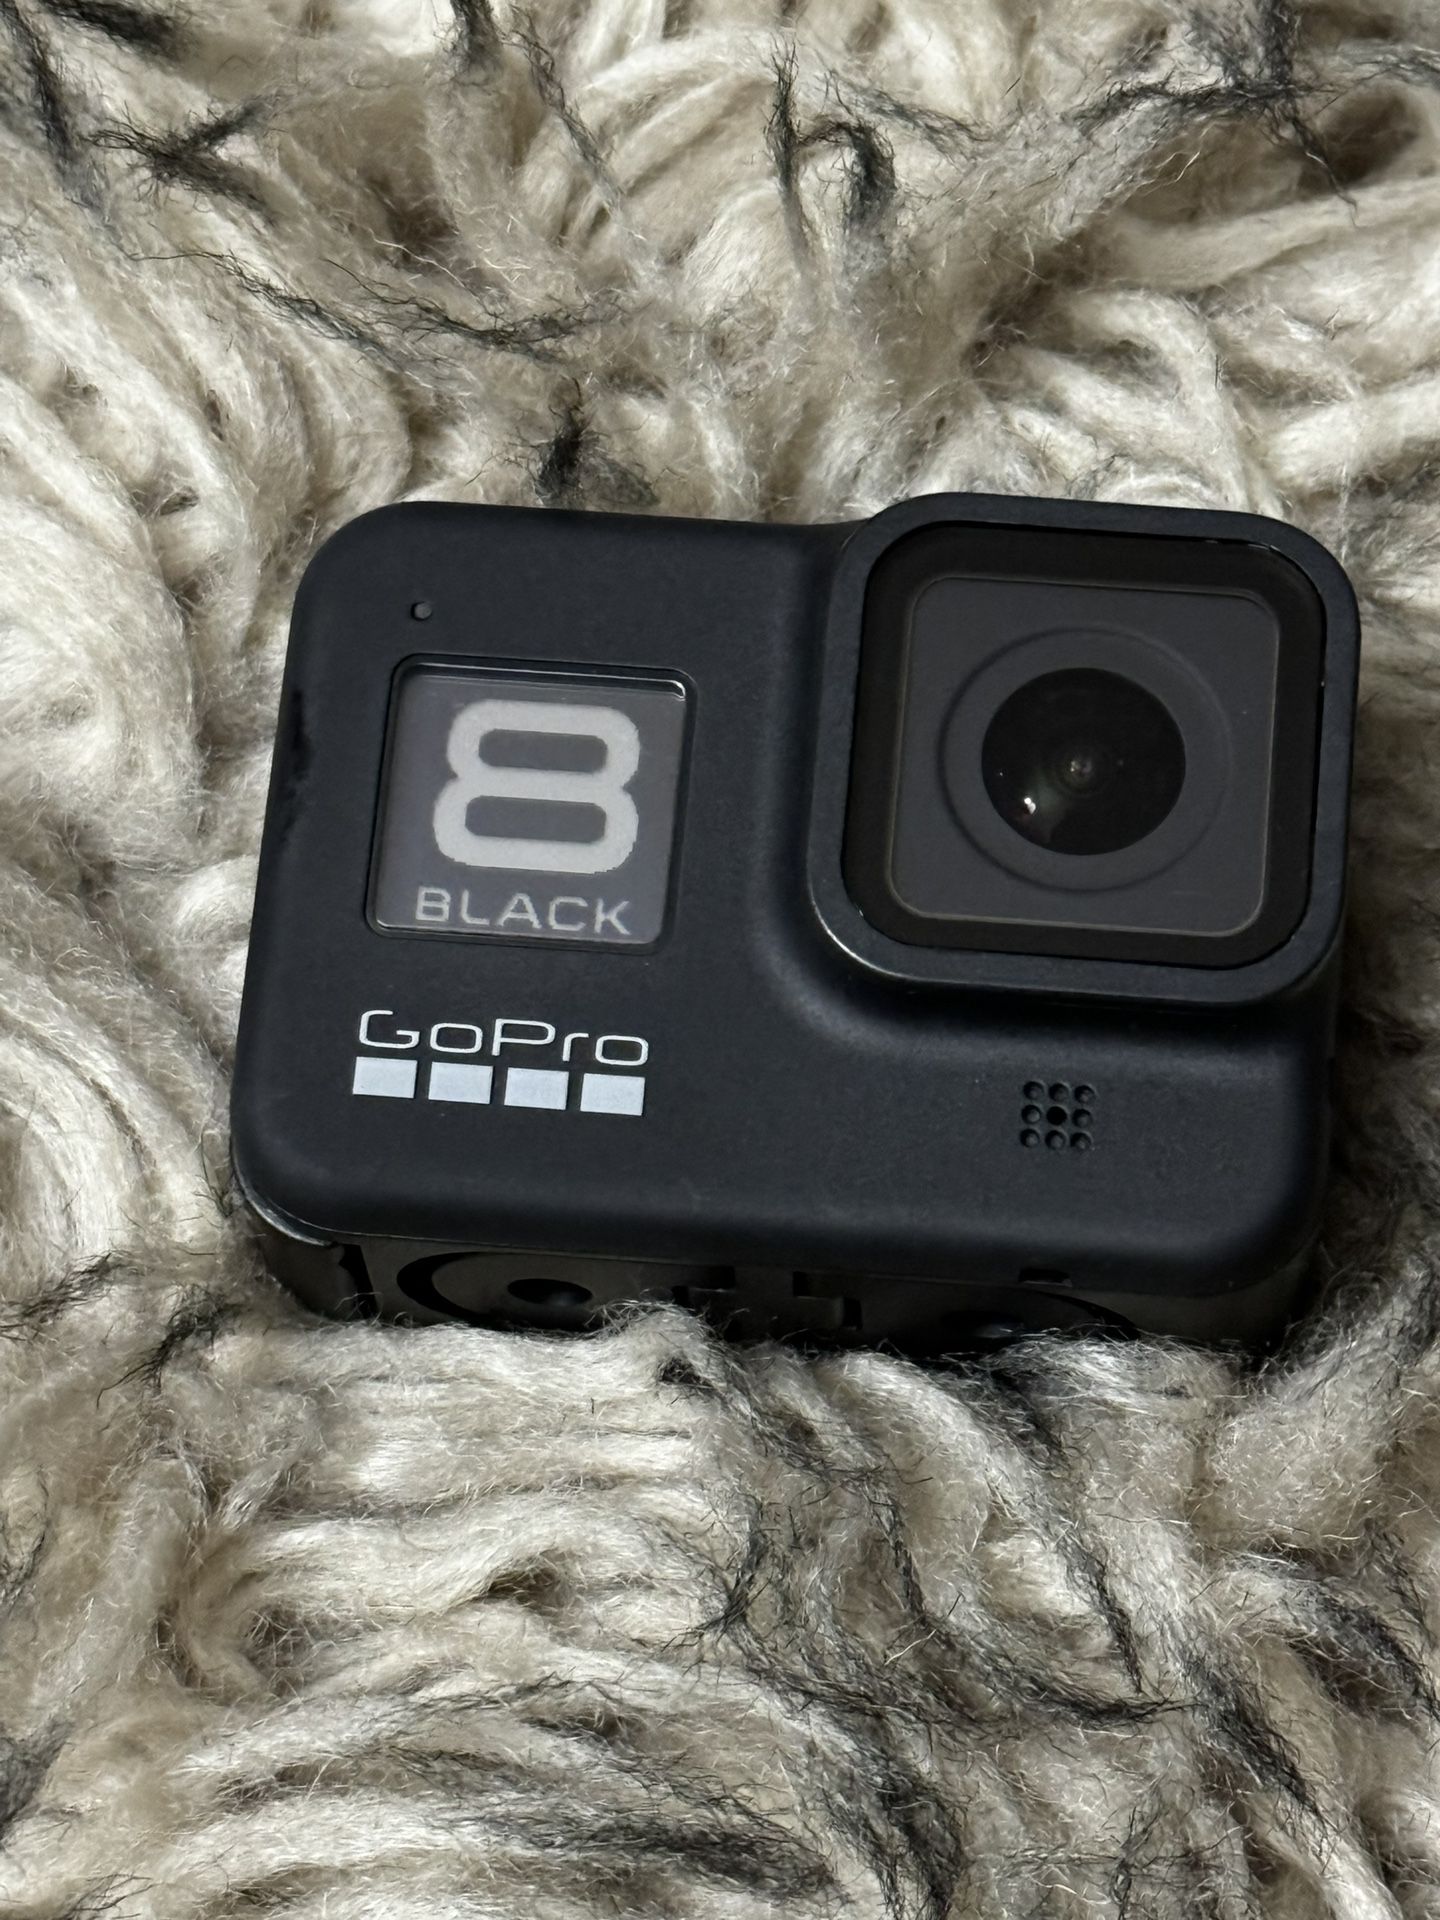 GoPro Hero 8 Black Camera